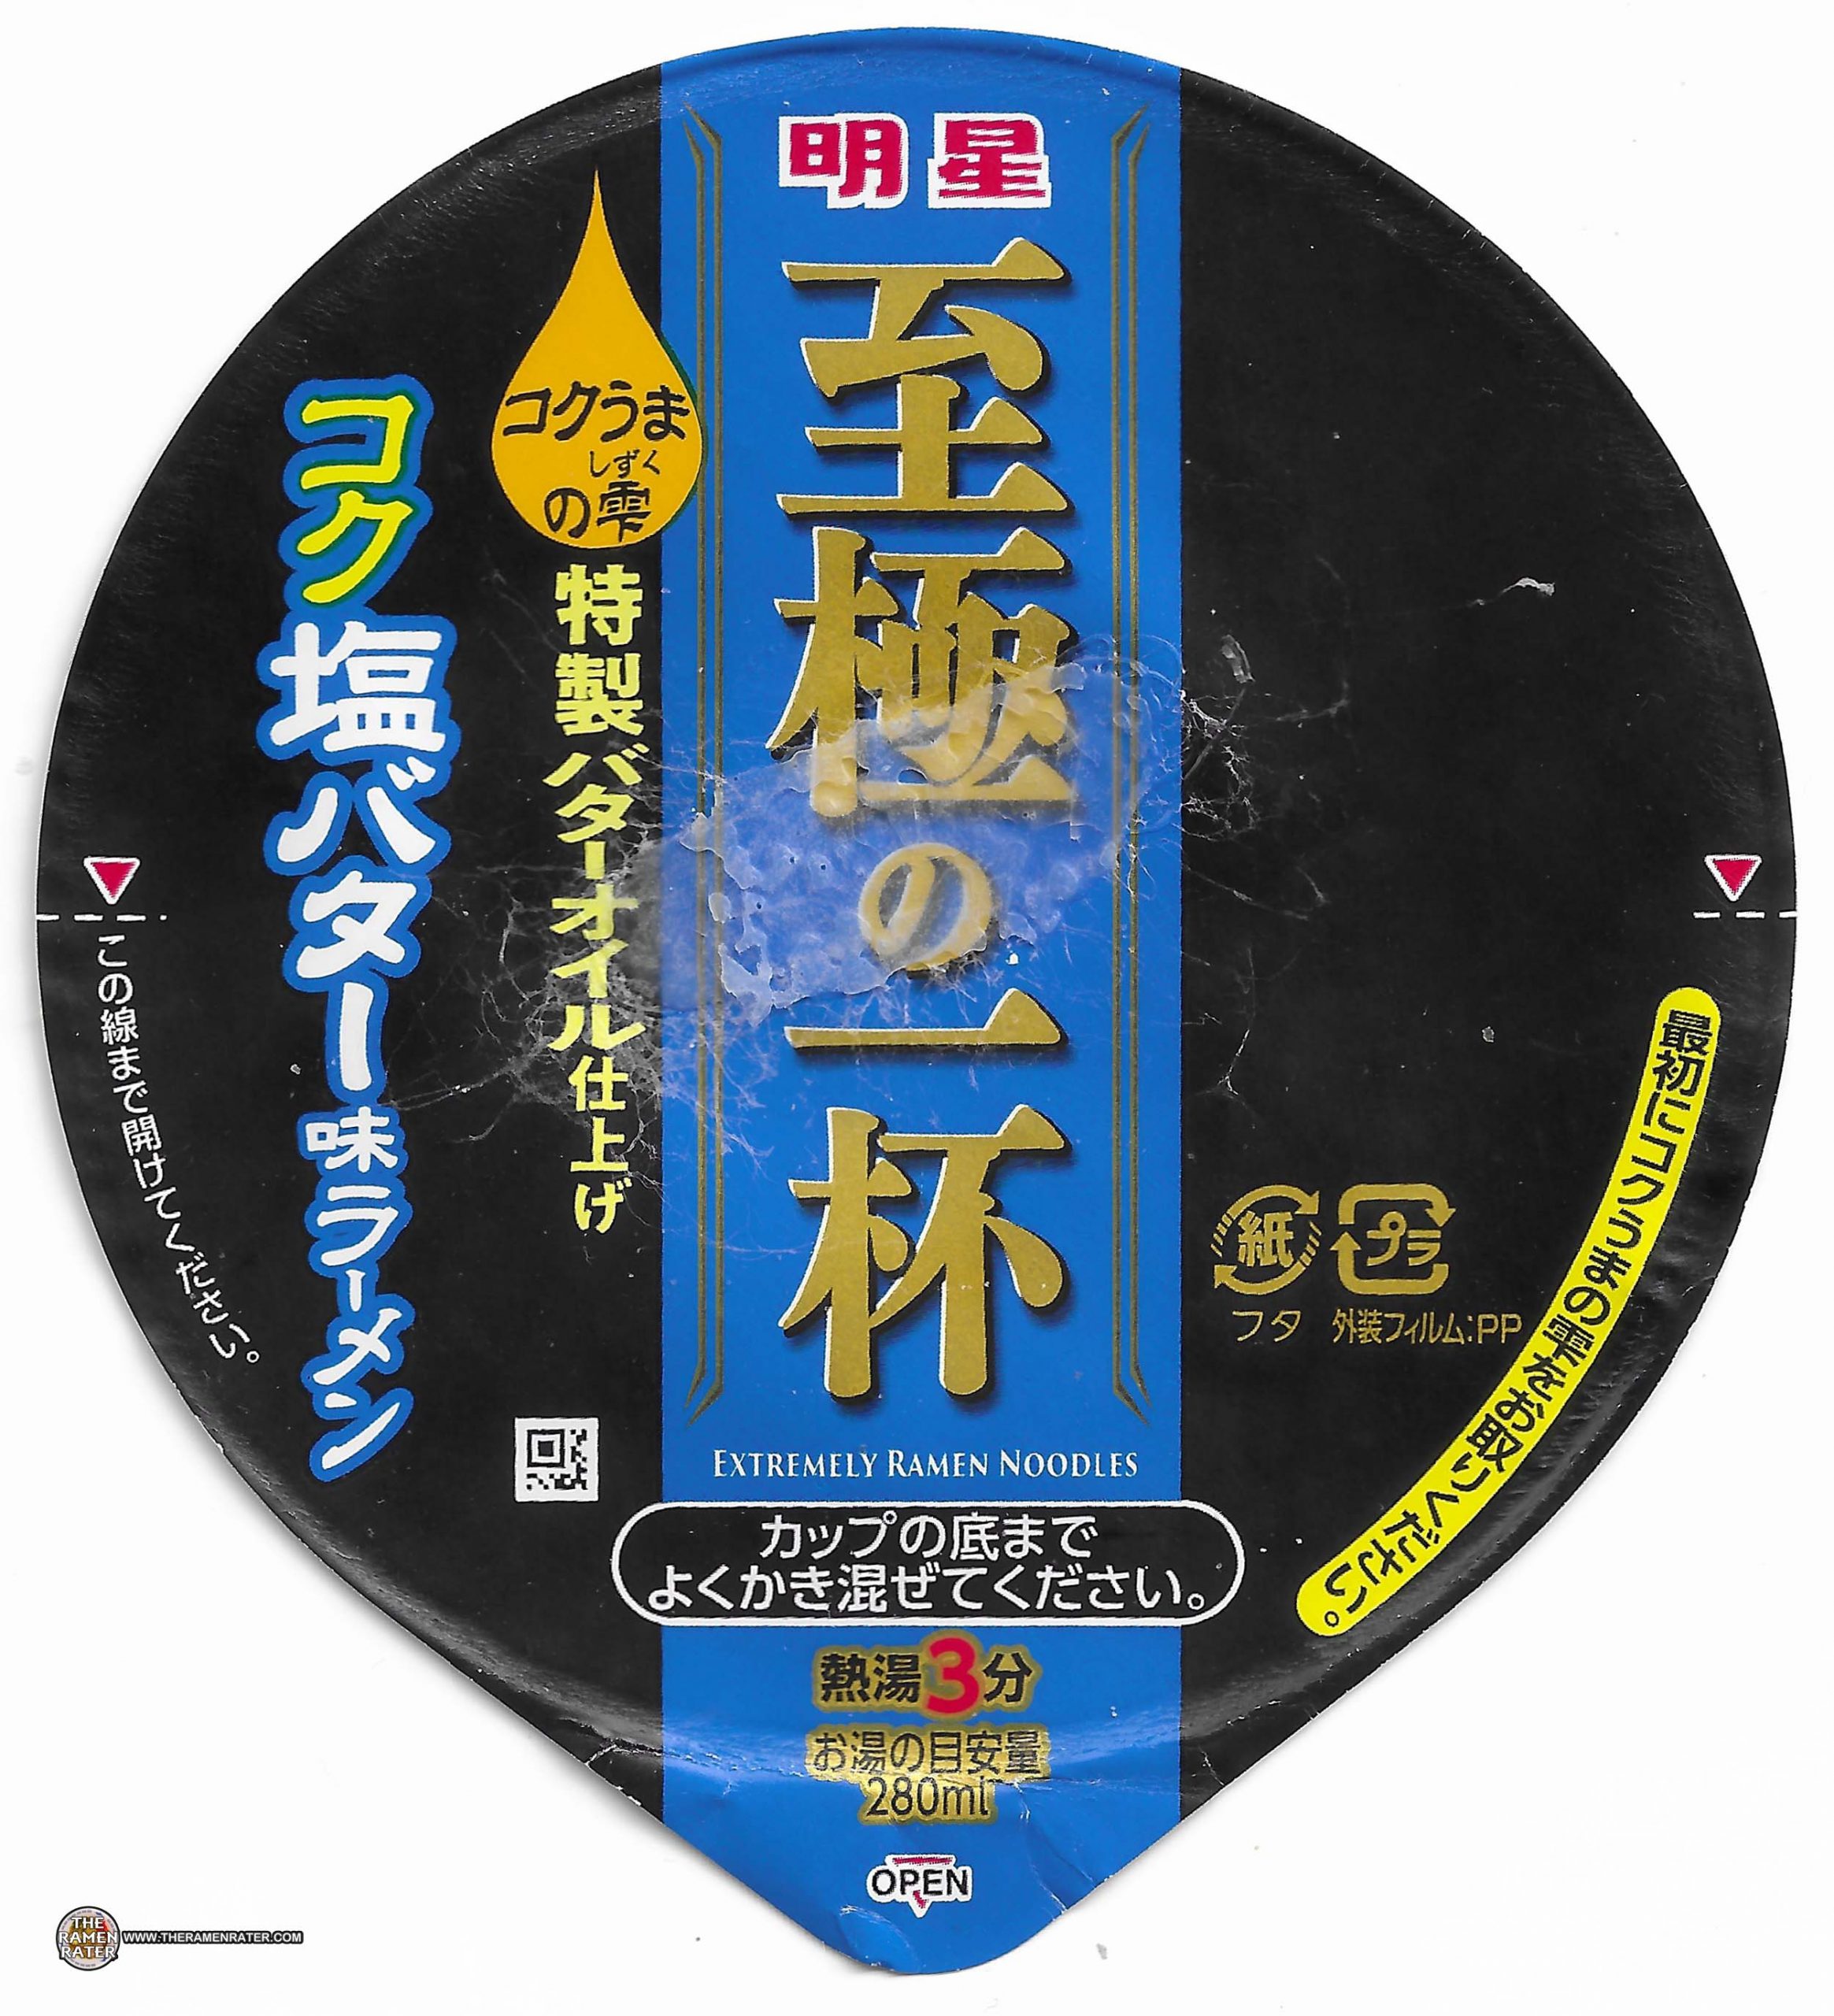 3441: Myojo Extremely Ramen Noodles Rich Potato Butter Shio - Japan